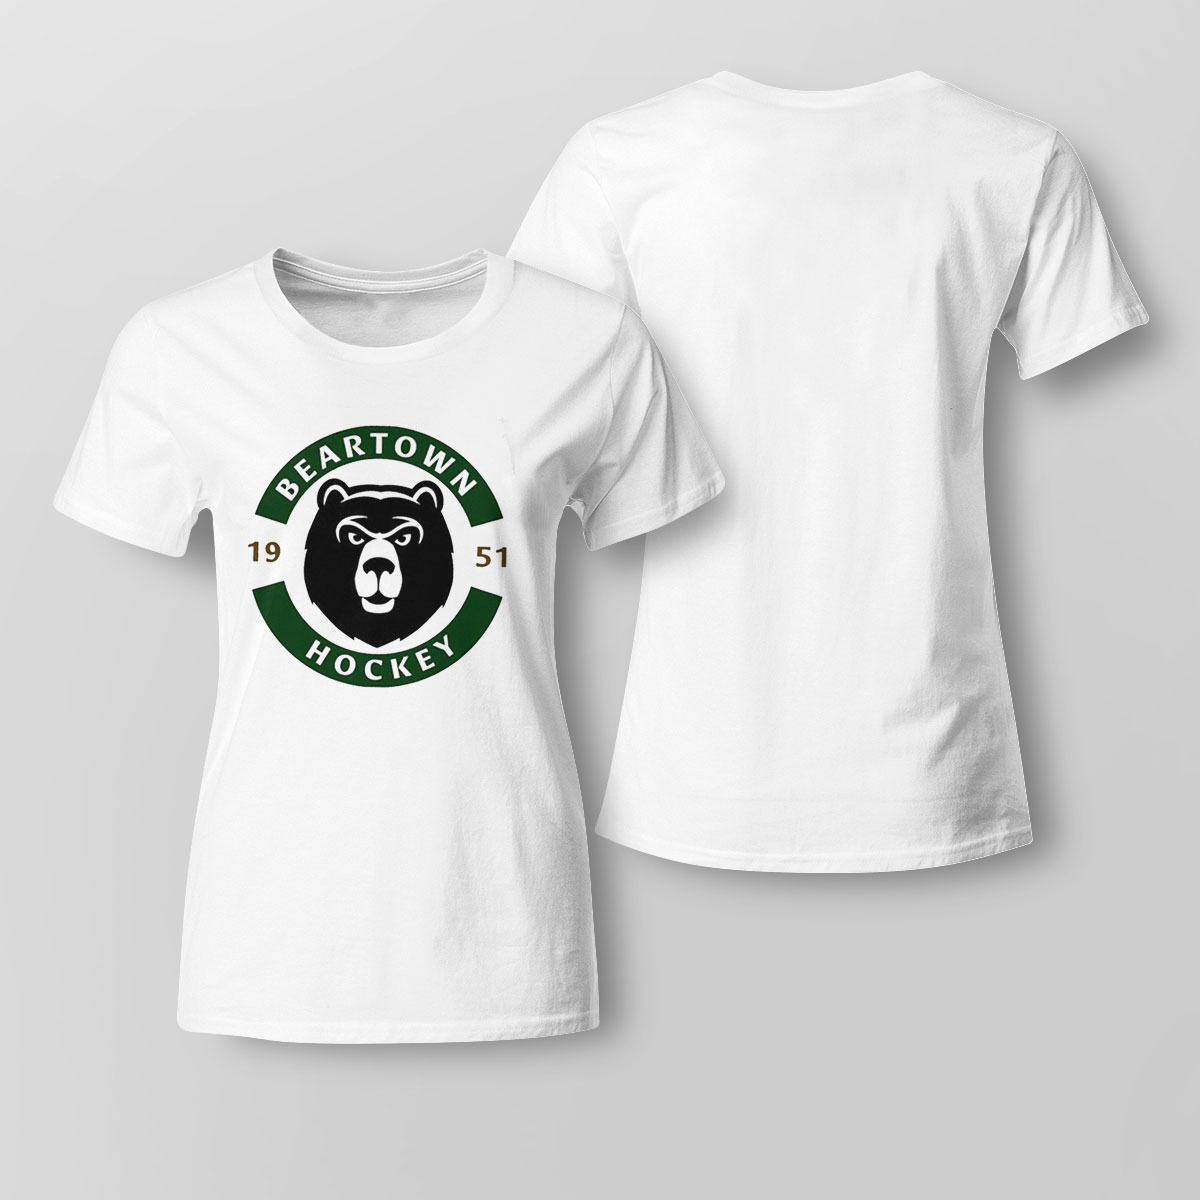 Beartown Hockey Logo Shirt Hoodie